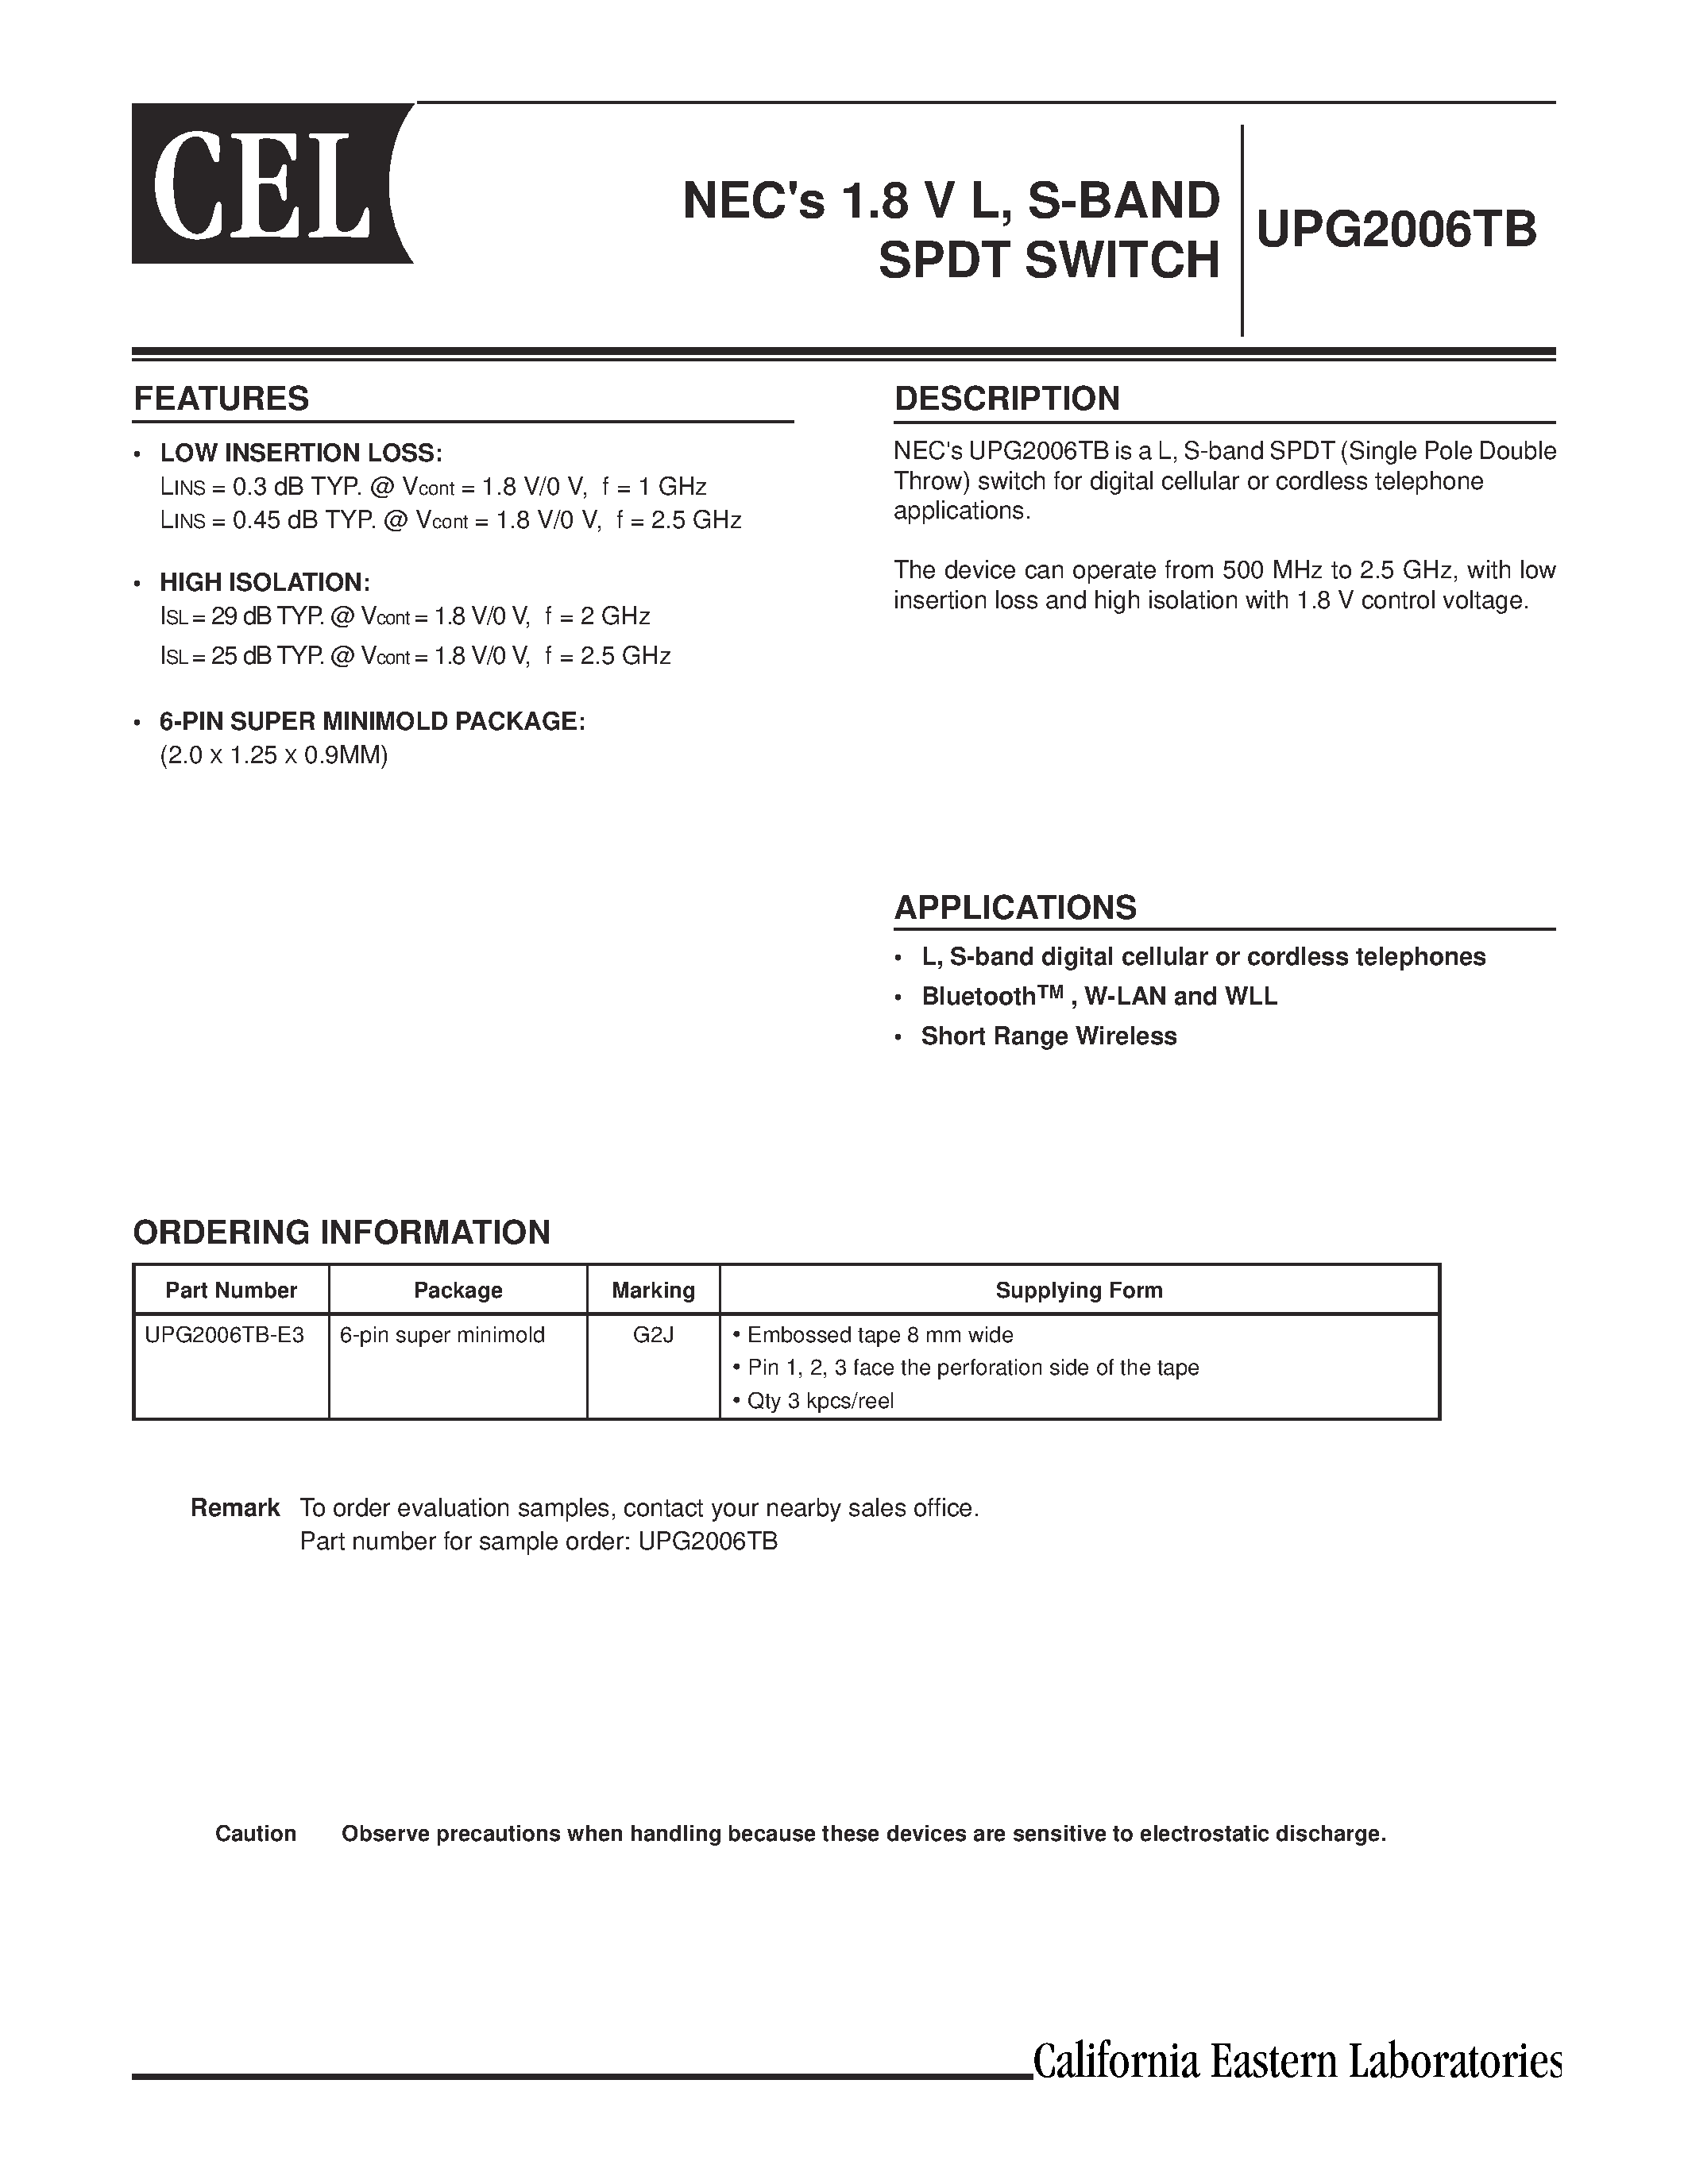 Datasheet UPG2006TB-E3 - NECs 1.8 V L/ S-BAND SPDT SWITCH page 1